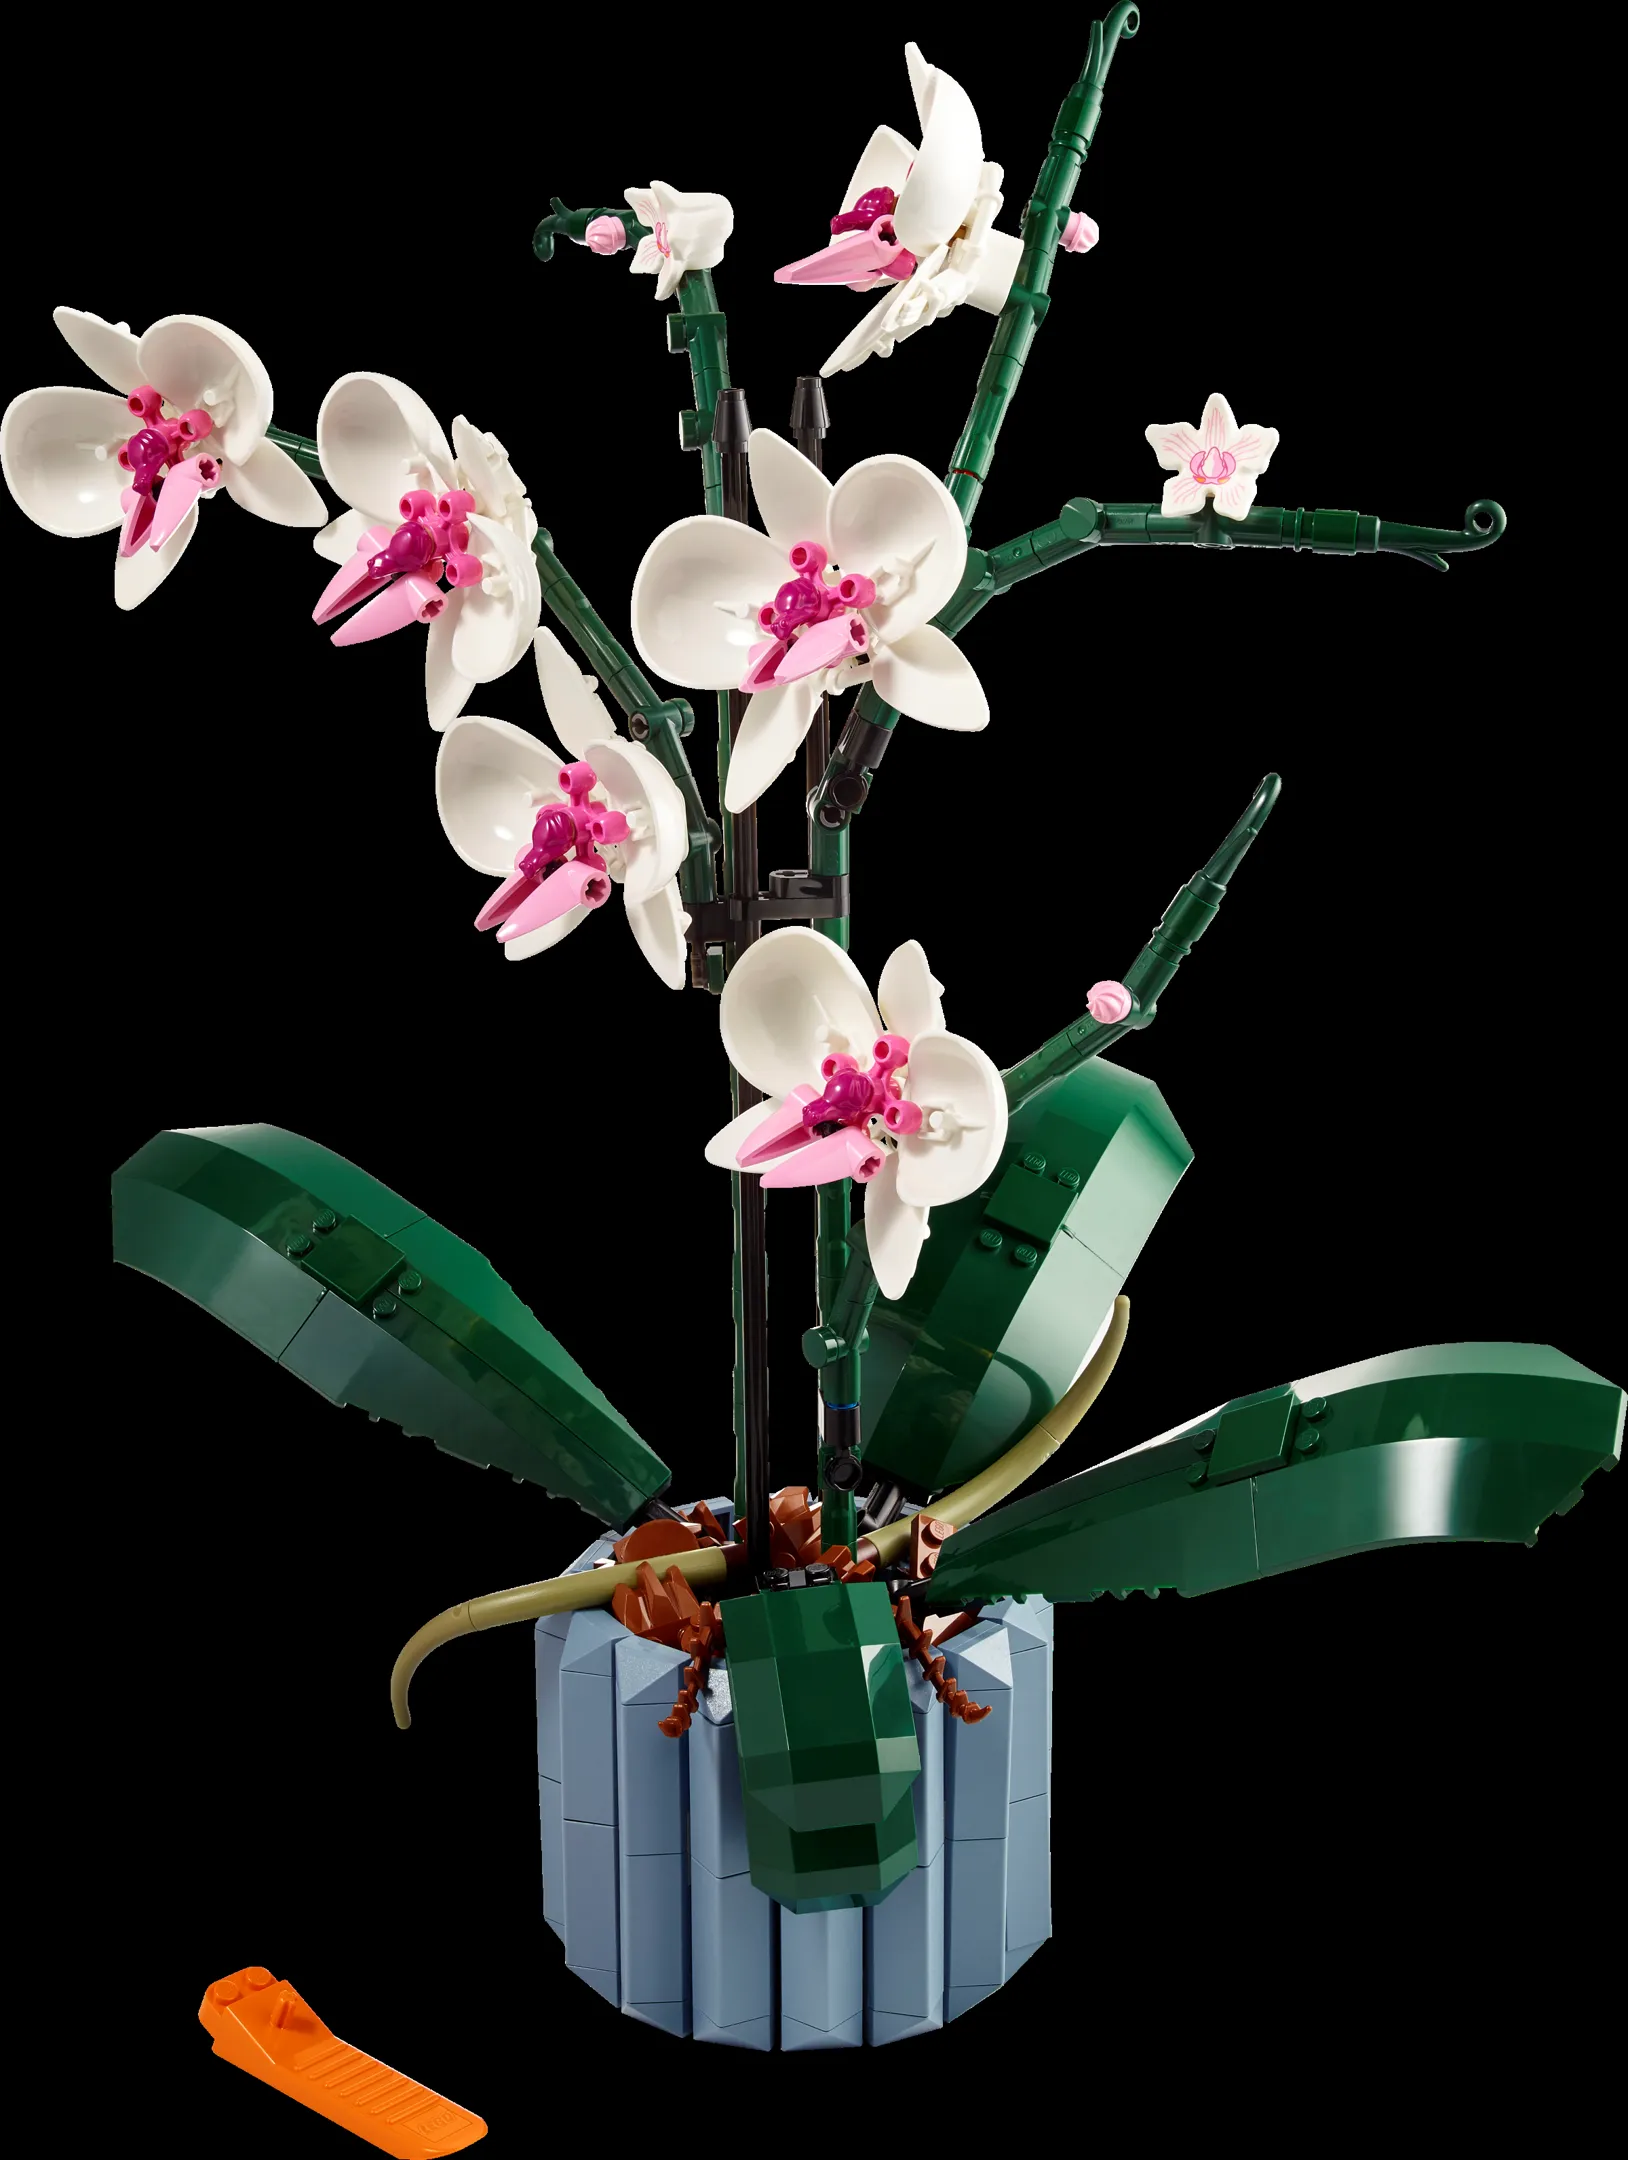 Lego orchidea icons 10311.